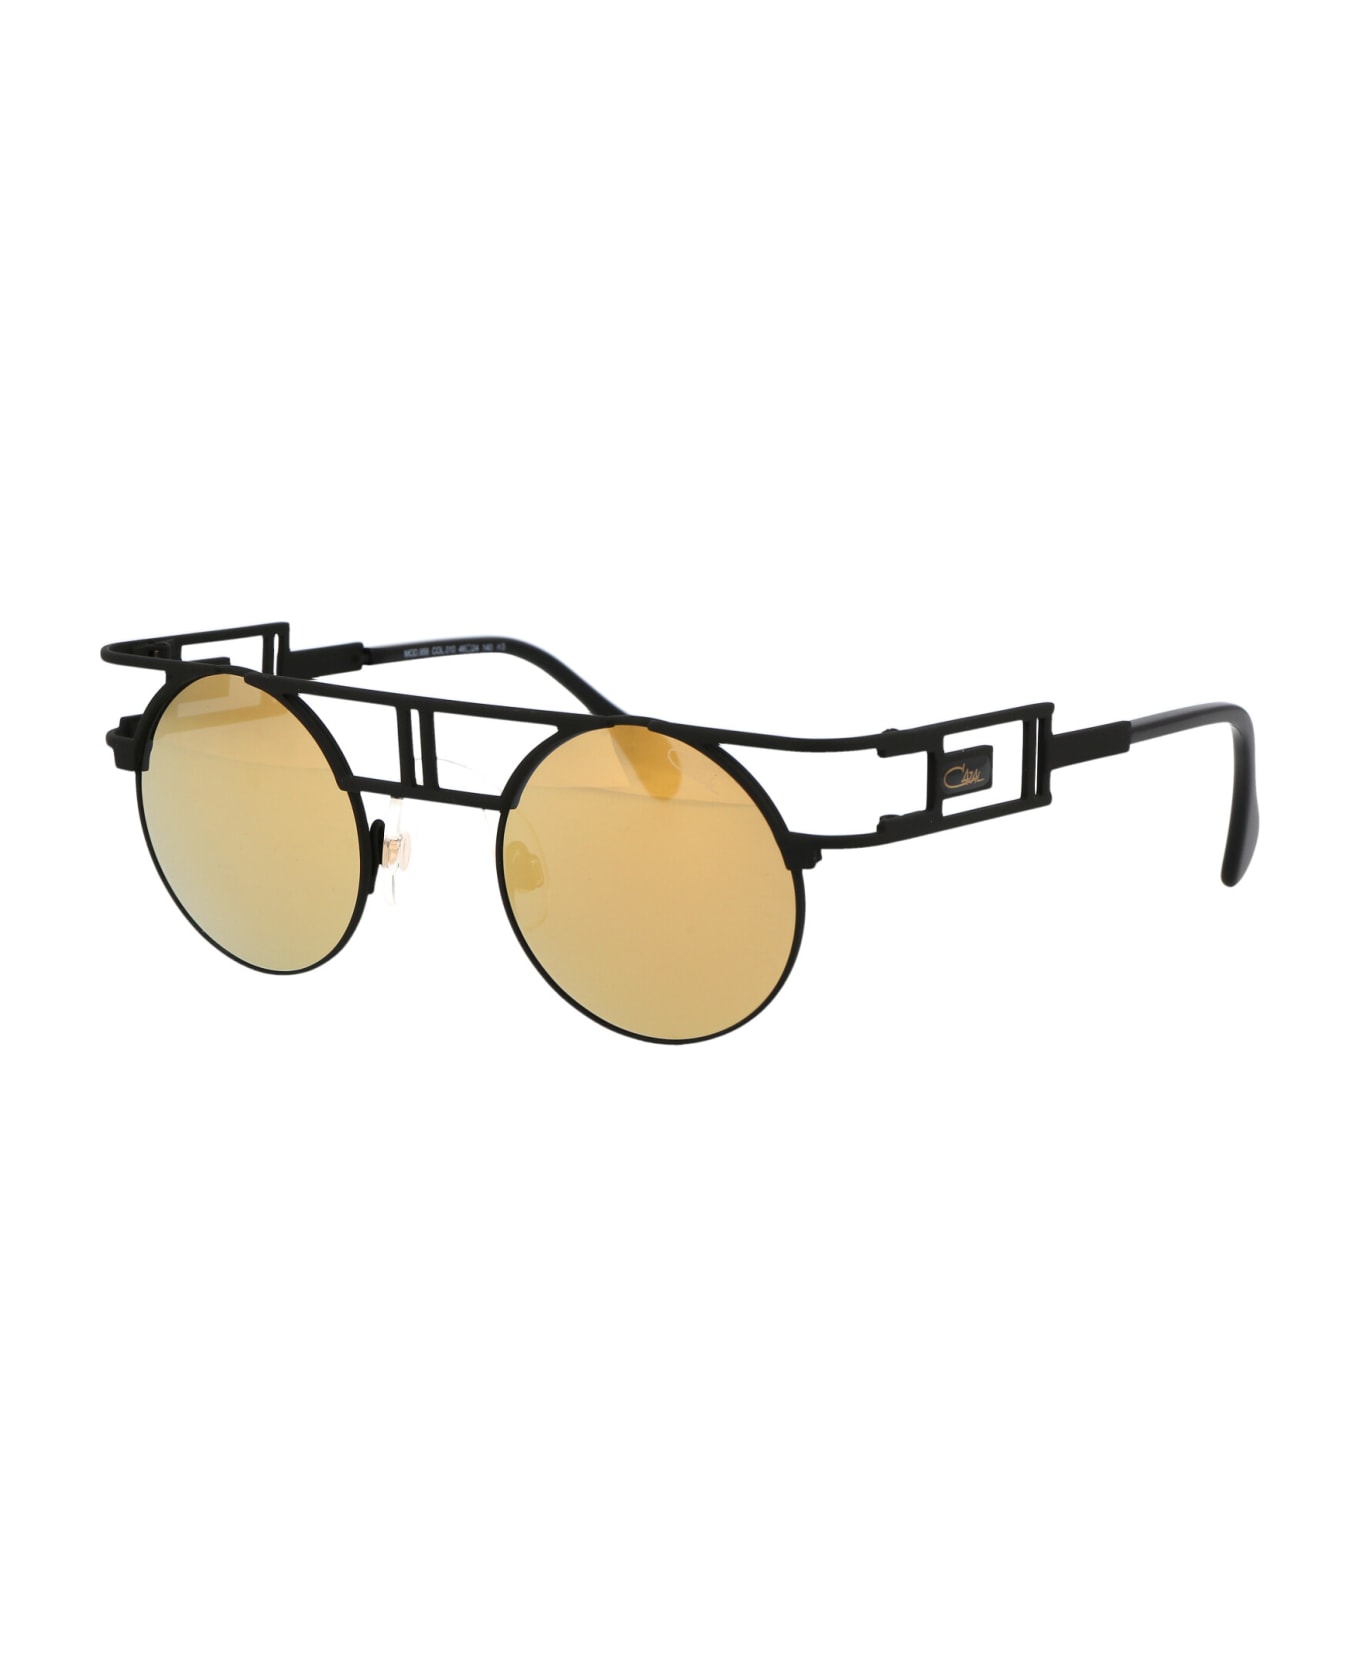 Cazal Mod. 958 Mach-s Sunglasses - 010 BLACK